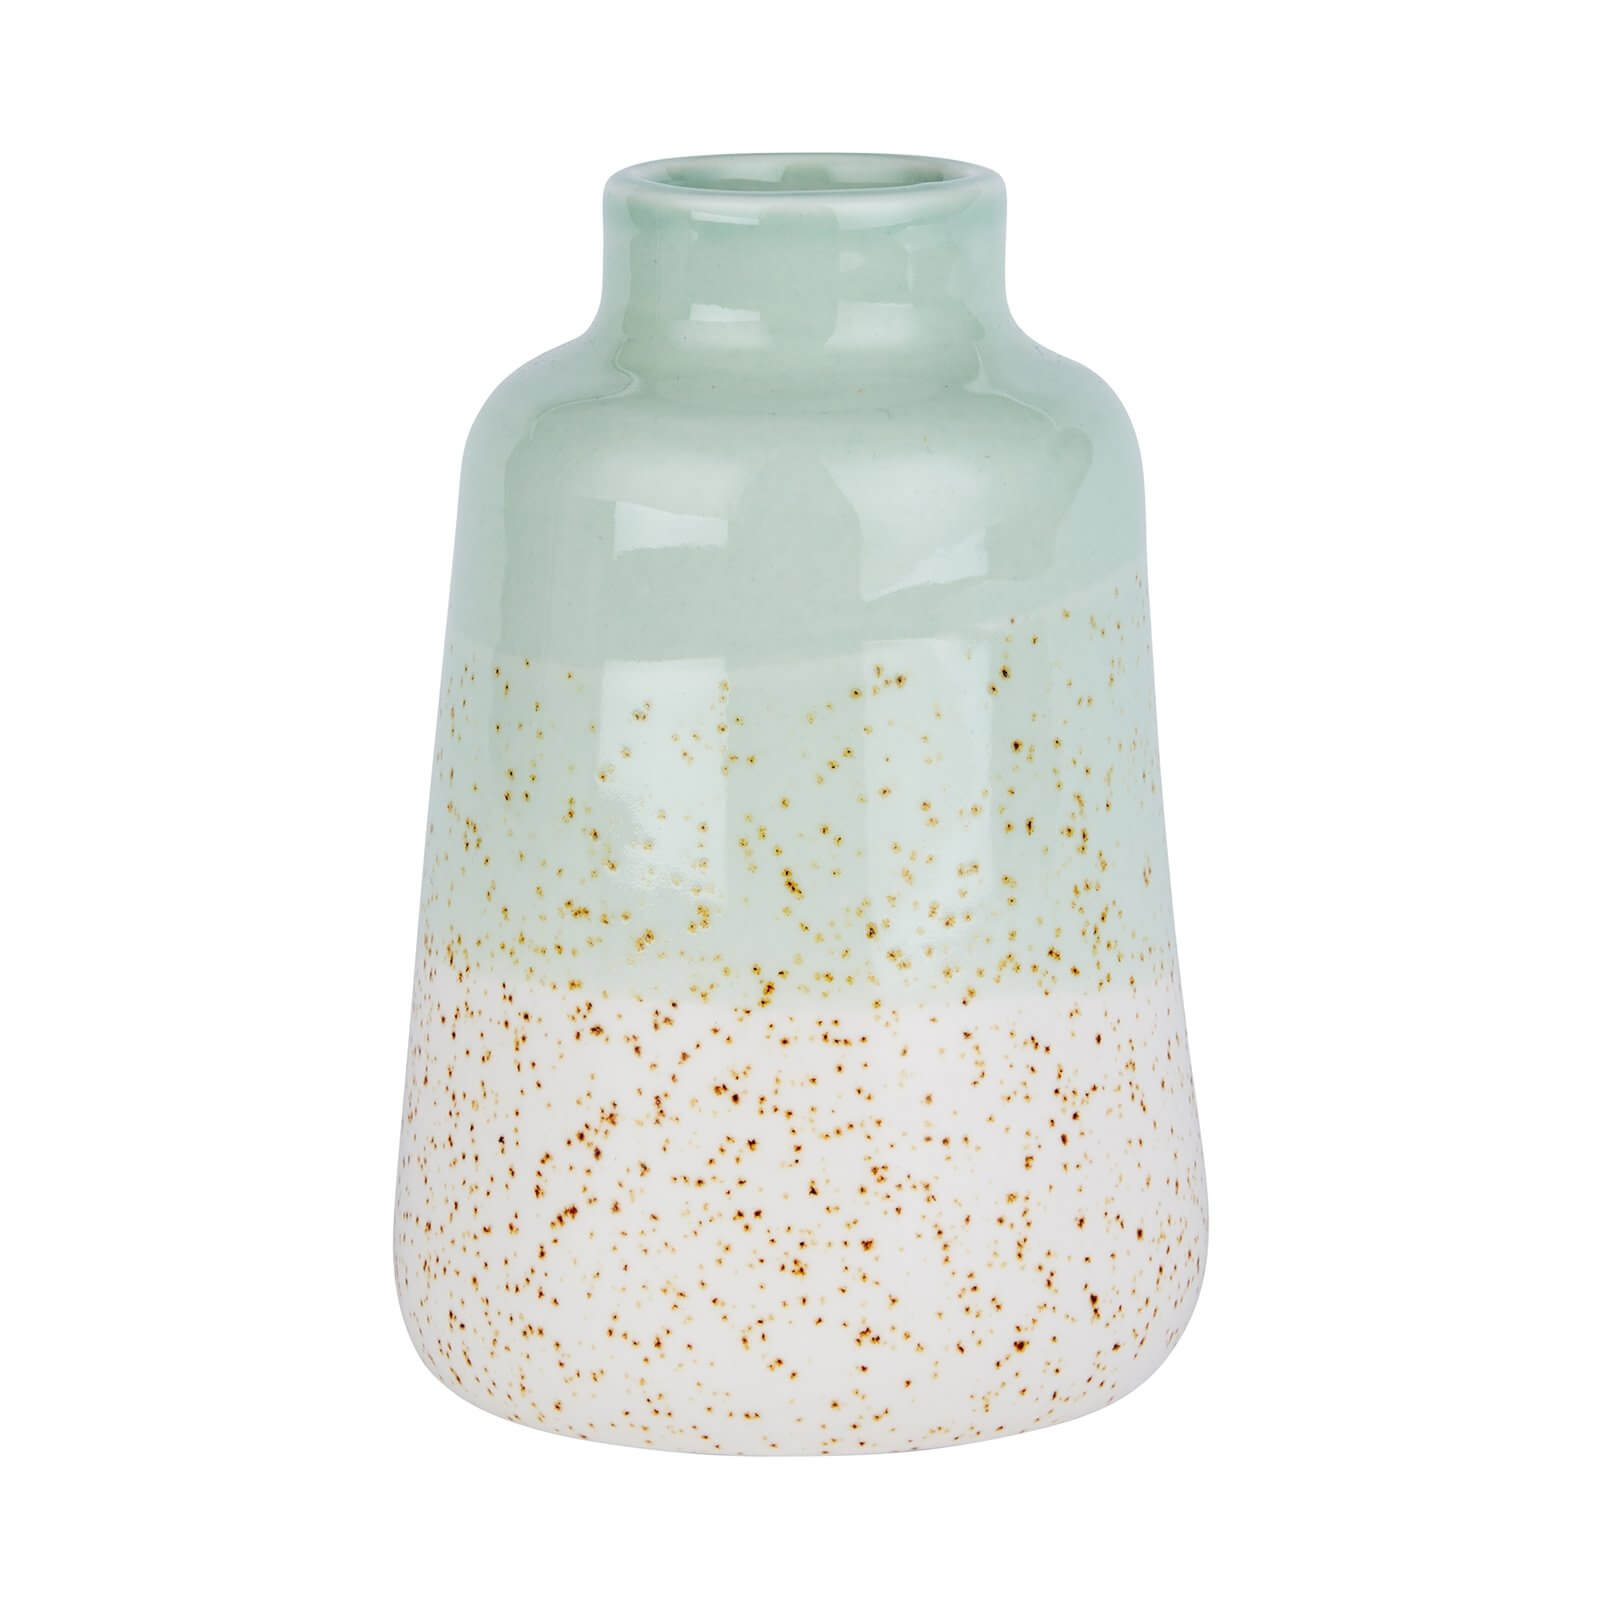 Small Ceramic Vase - Green & White